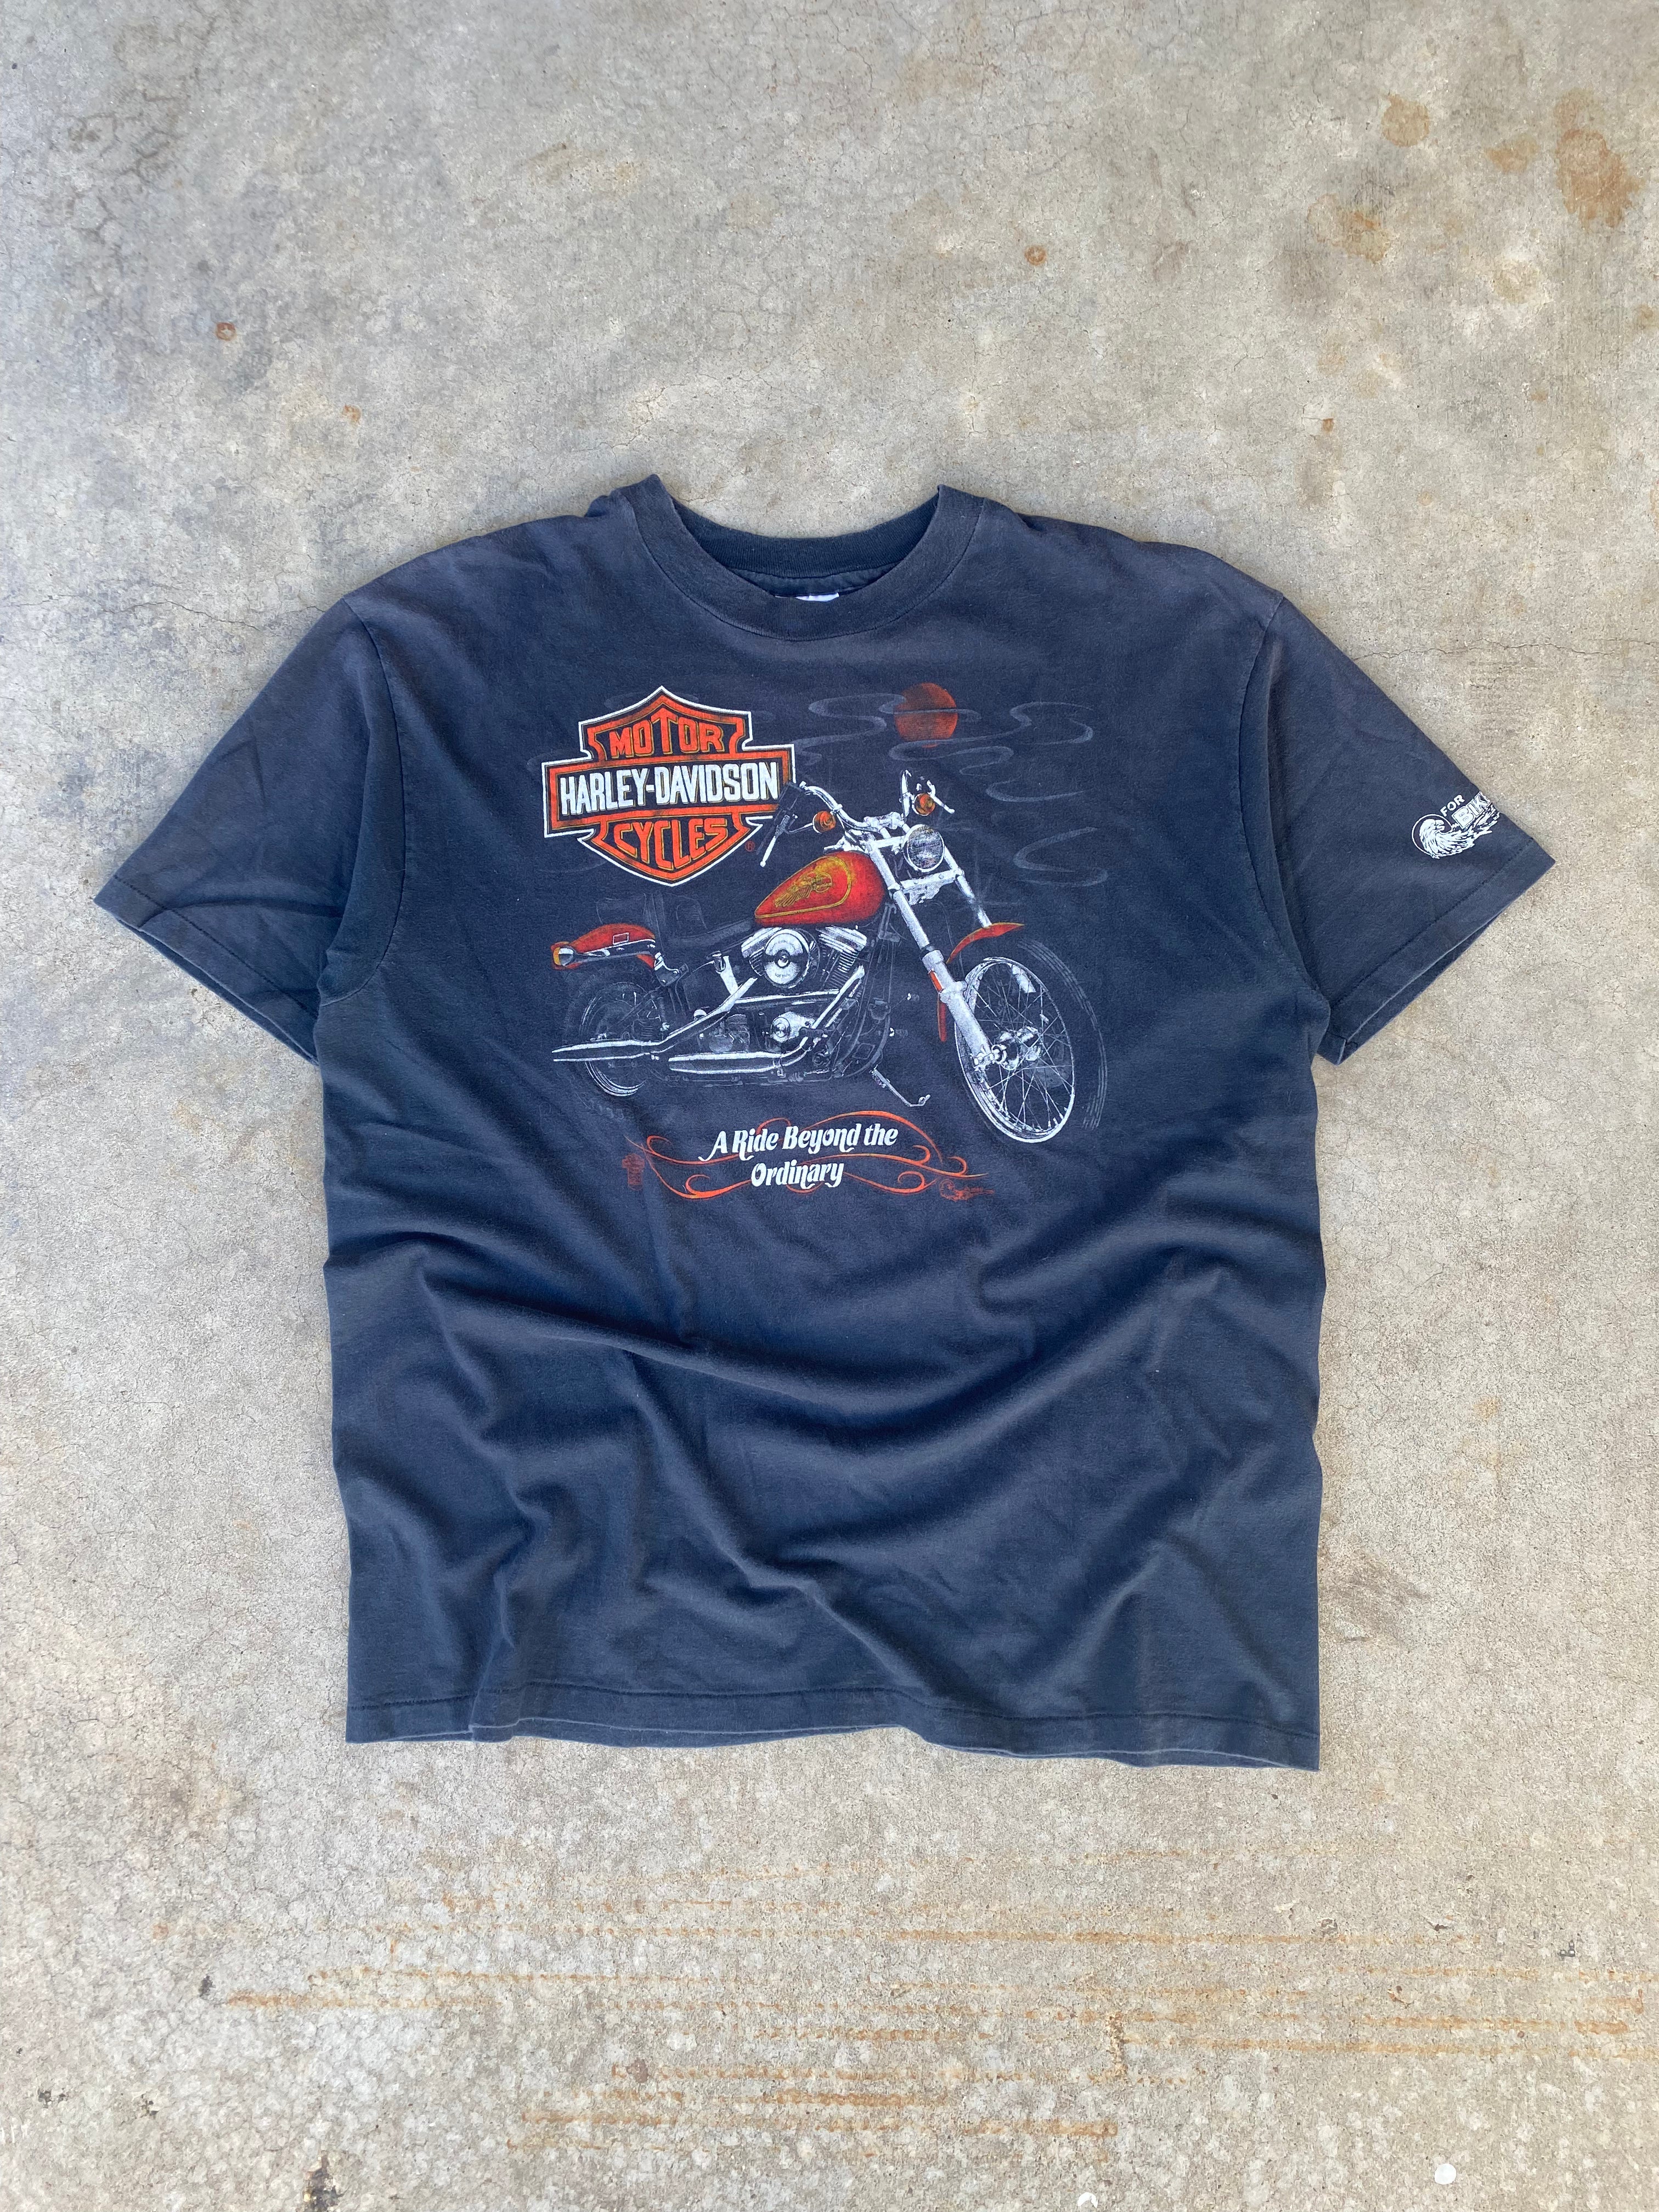 1986 Harley Davidson A Ride Beyond the Ordinary T-Shirt (XL)